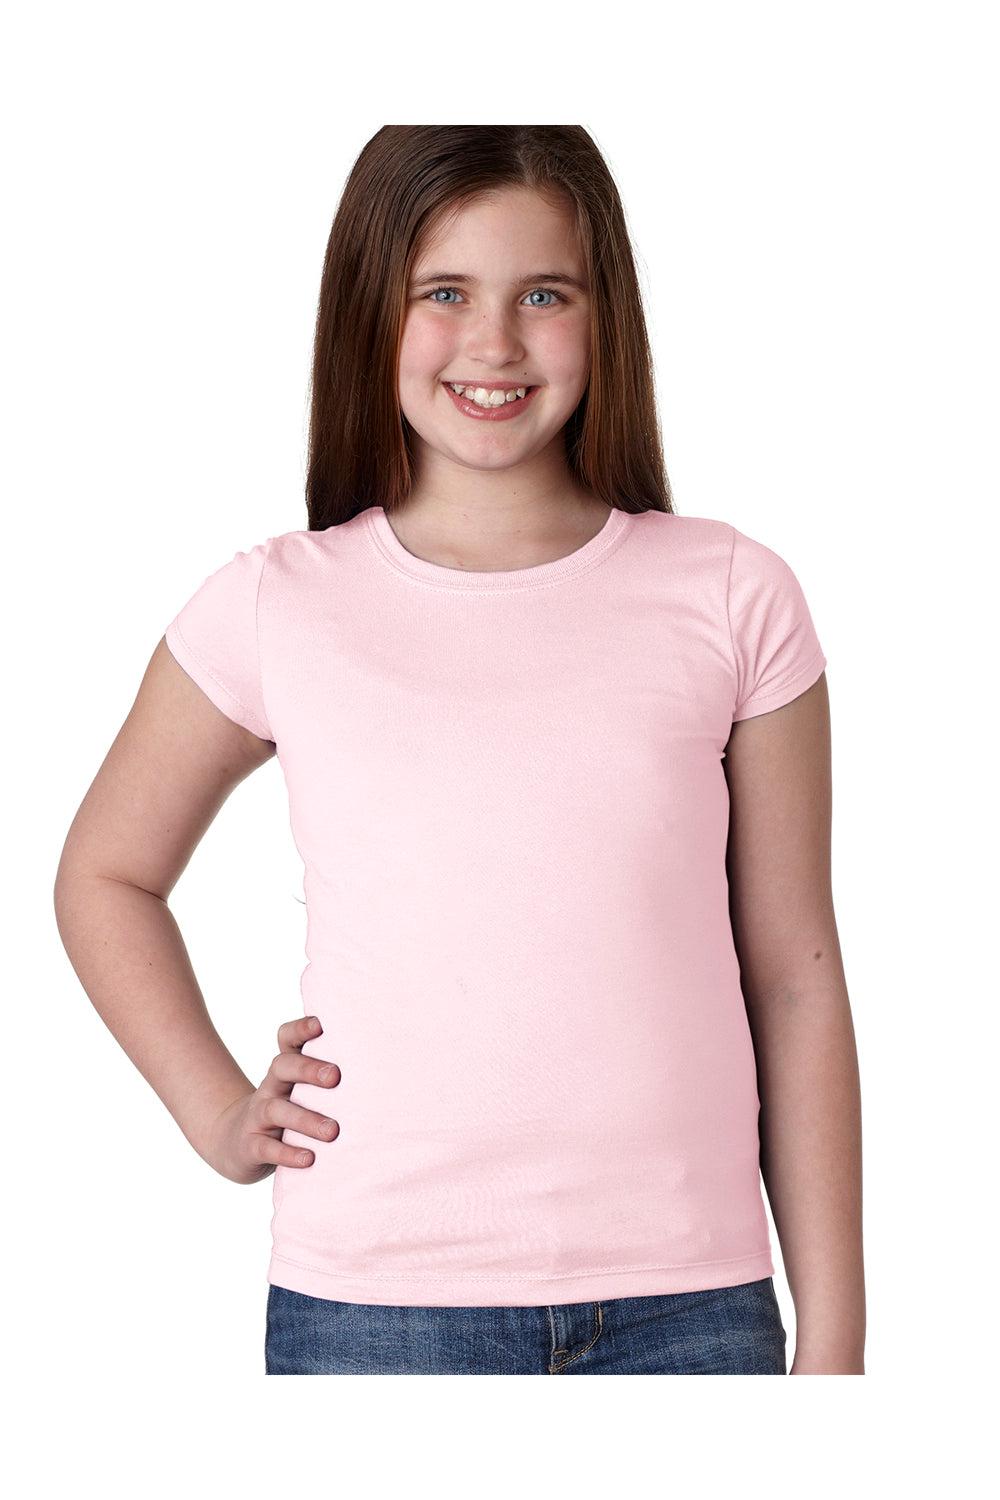 Next Level N3710 Youth Princess Fine Jersey Short Sleeve Crewneck T-Shirt Light Pink Front